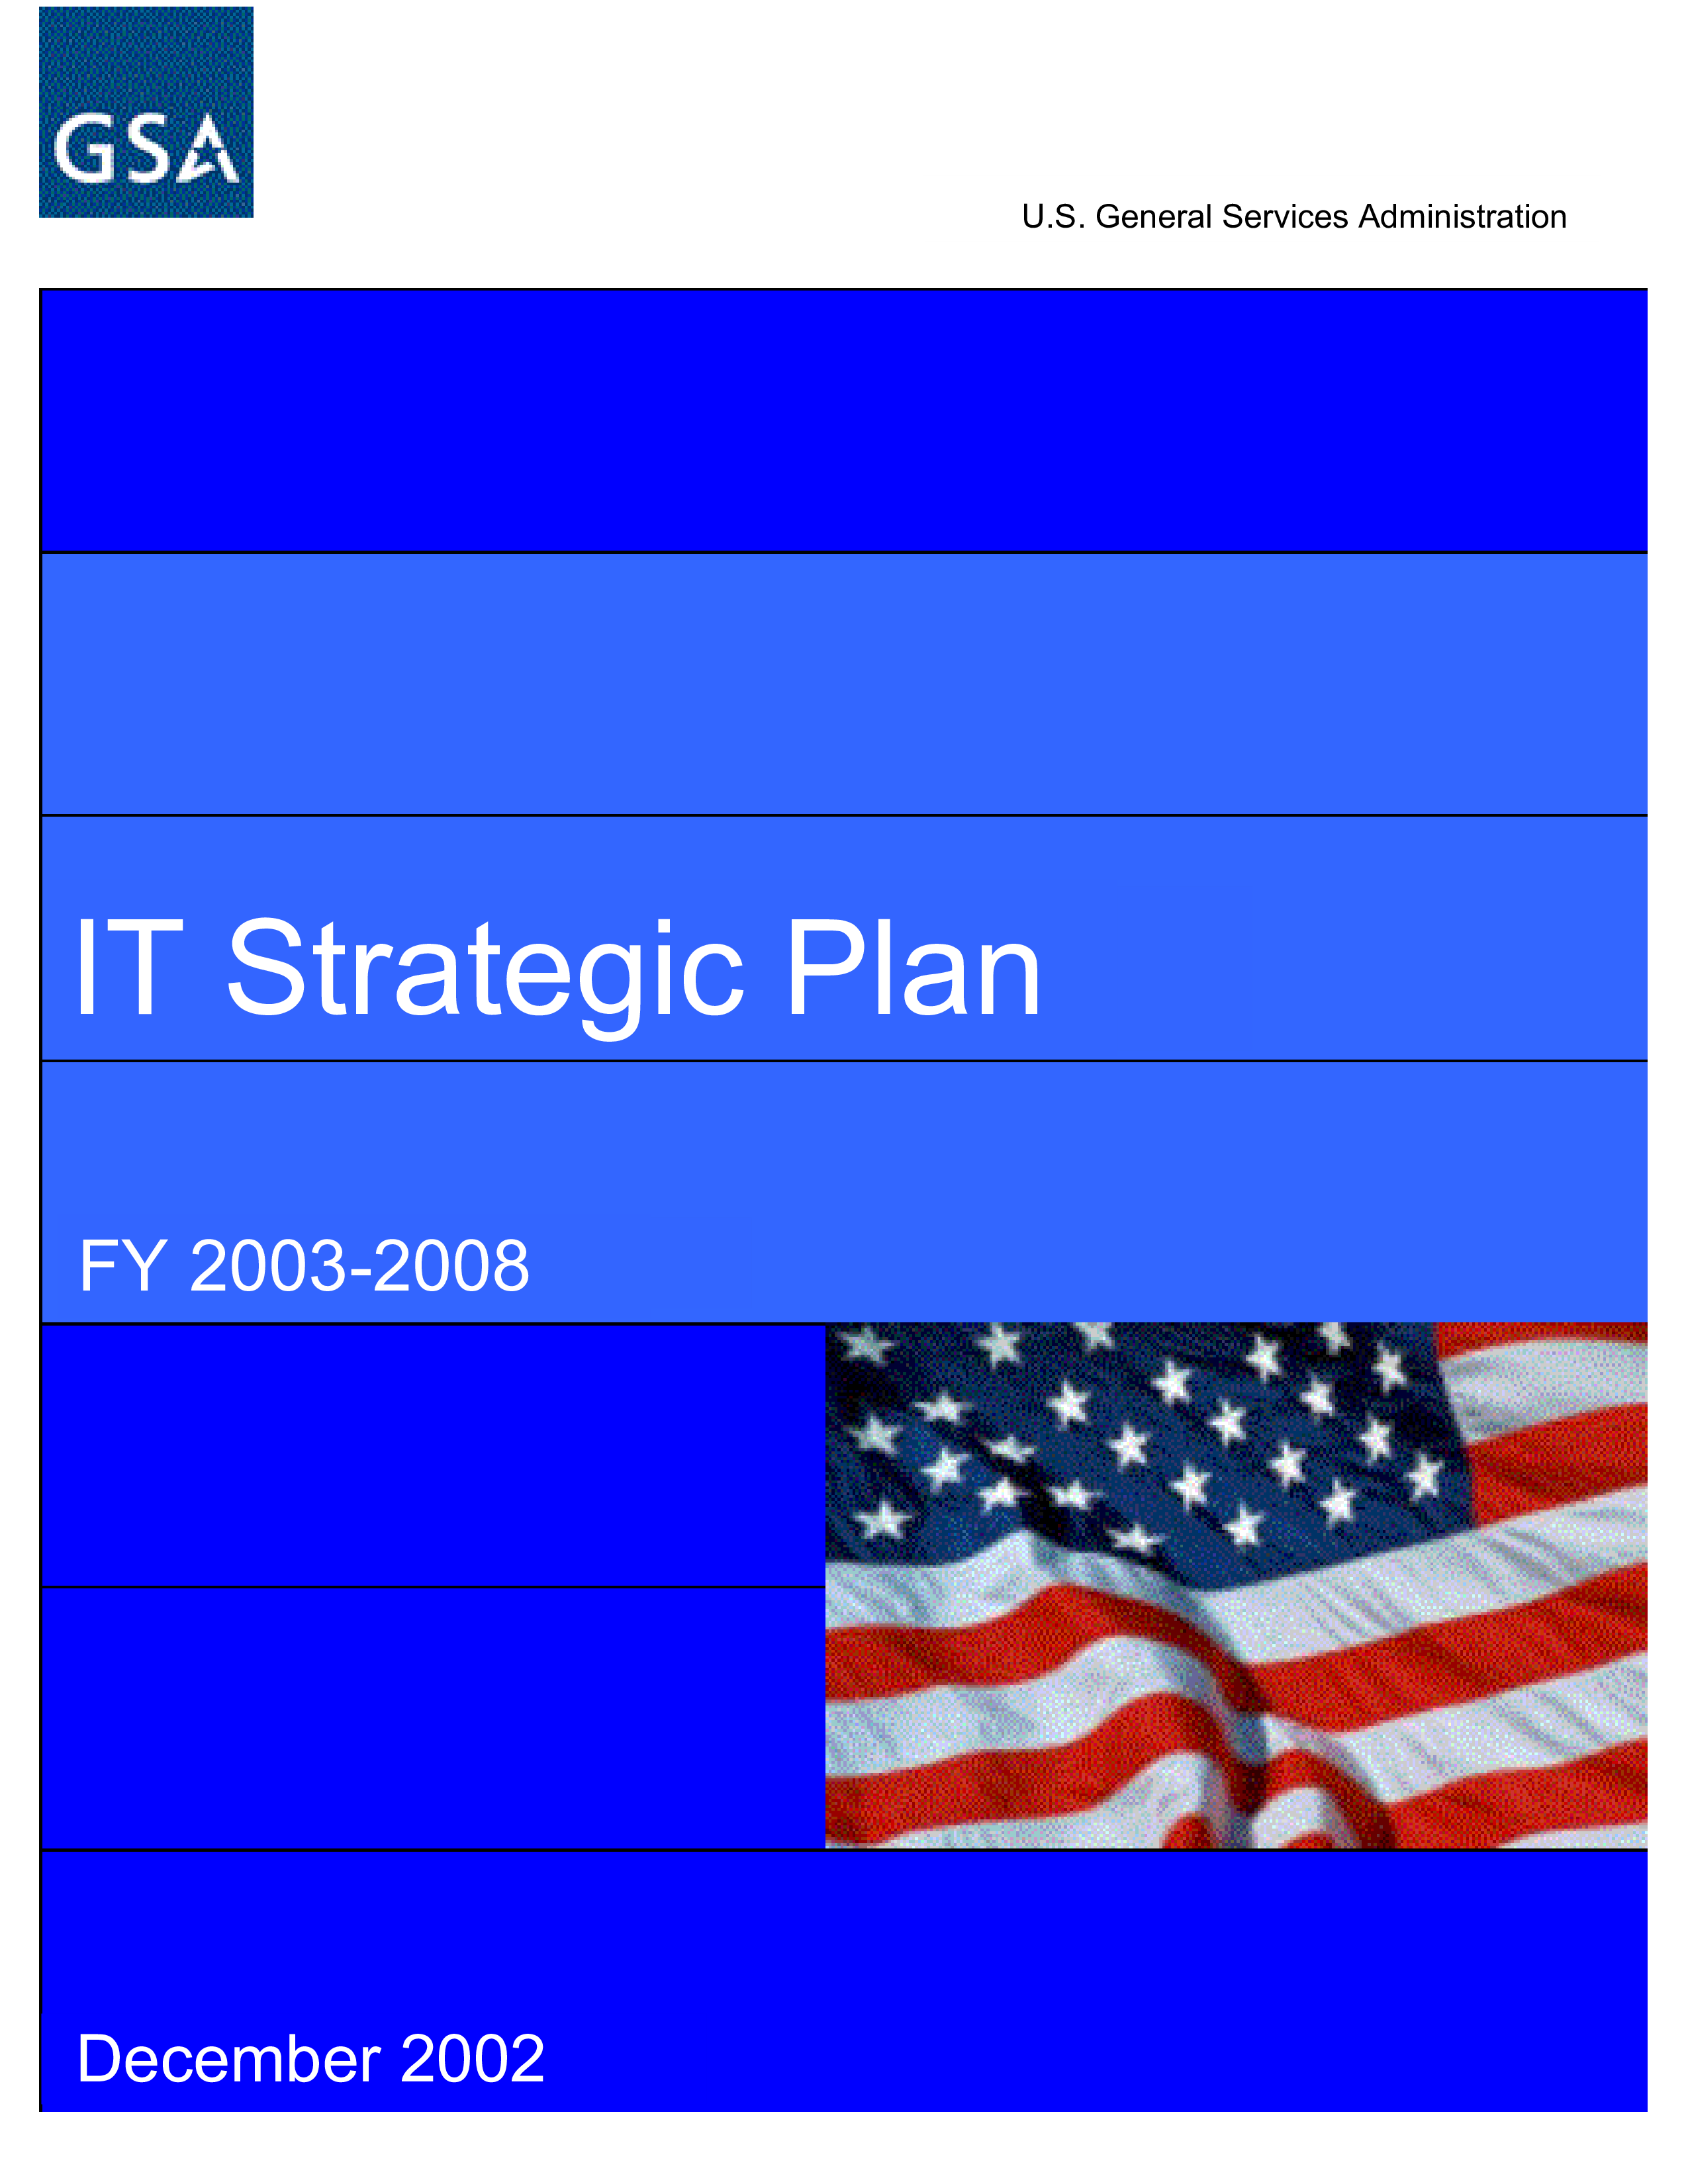 IT Strategic Business Plan main image